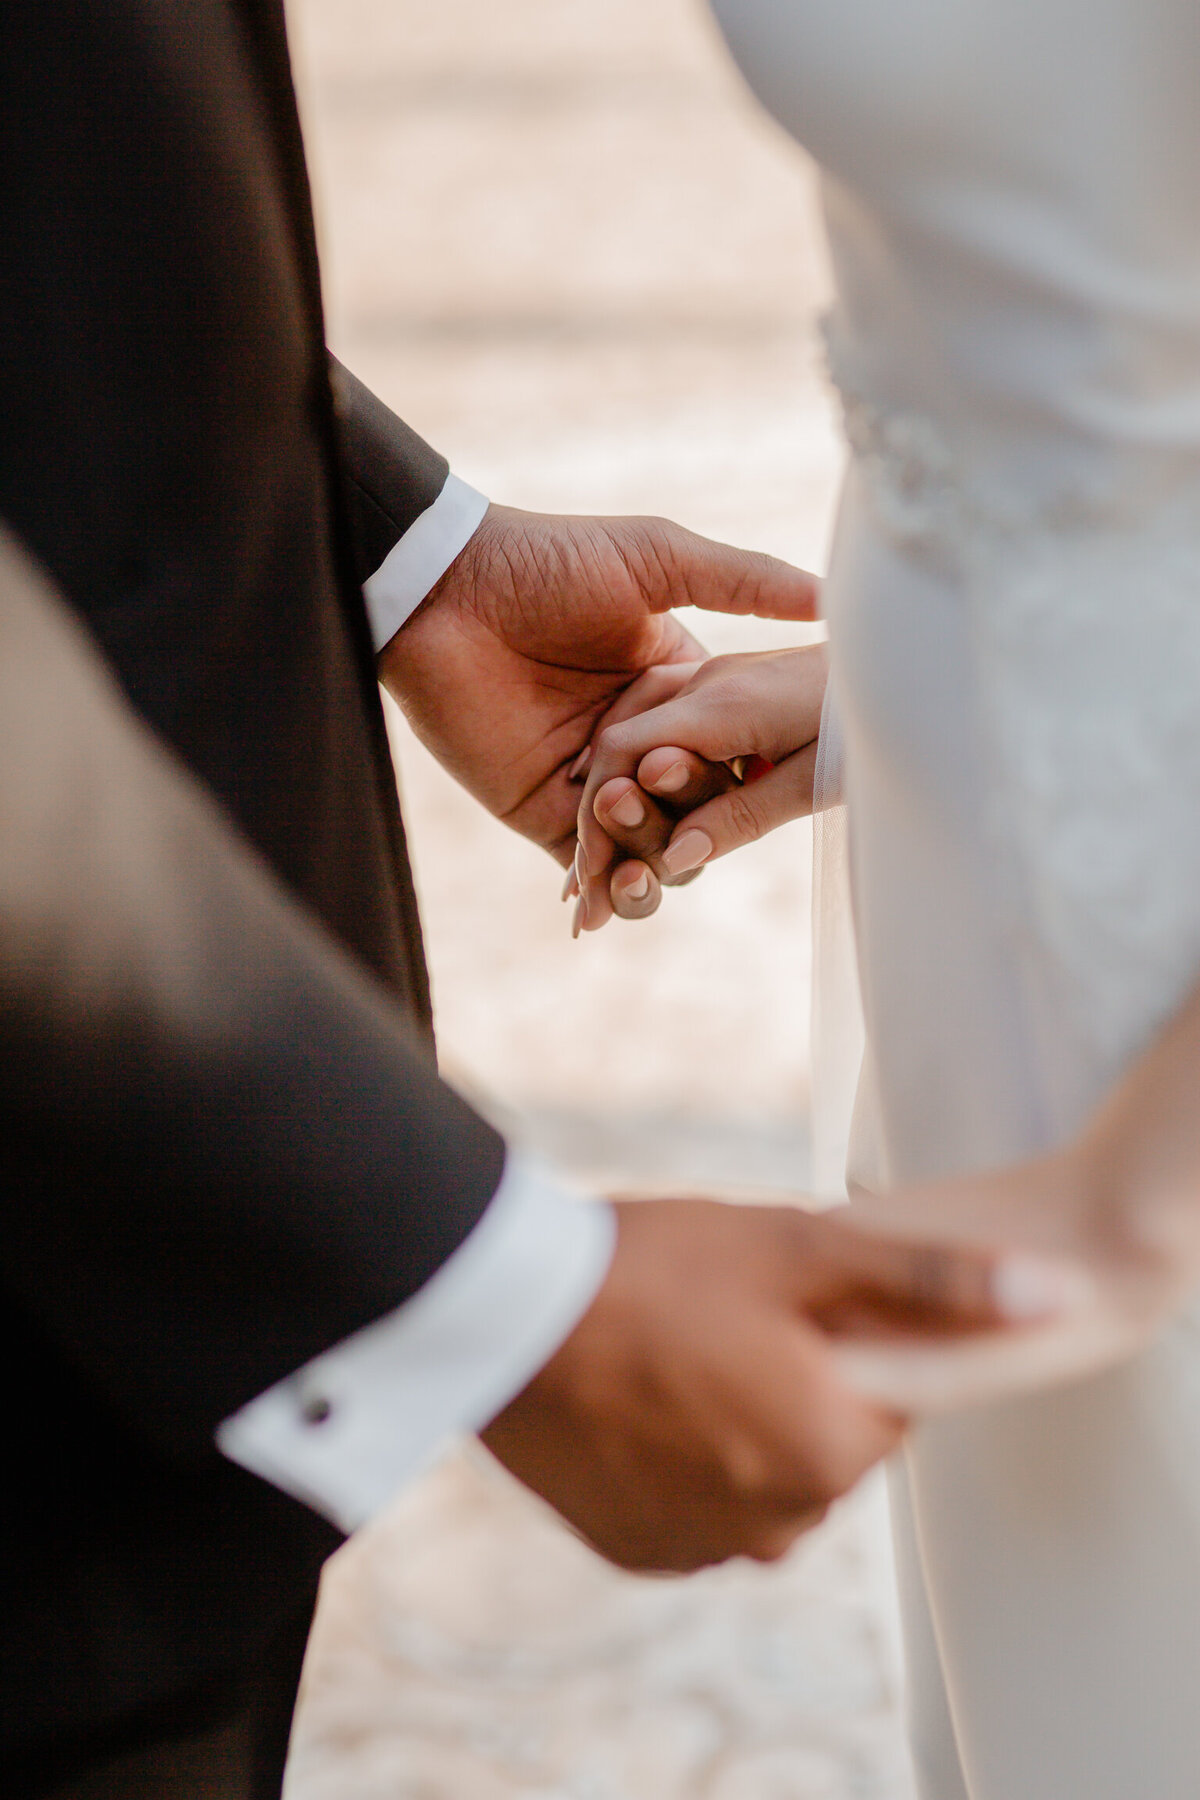 alt="bride and groom holding hands ceremony"